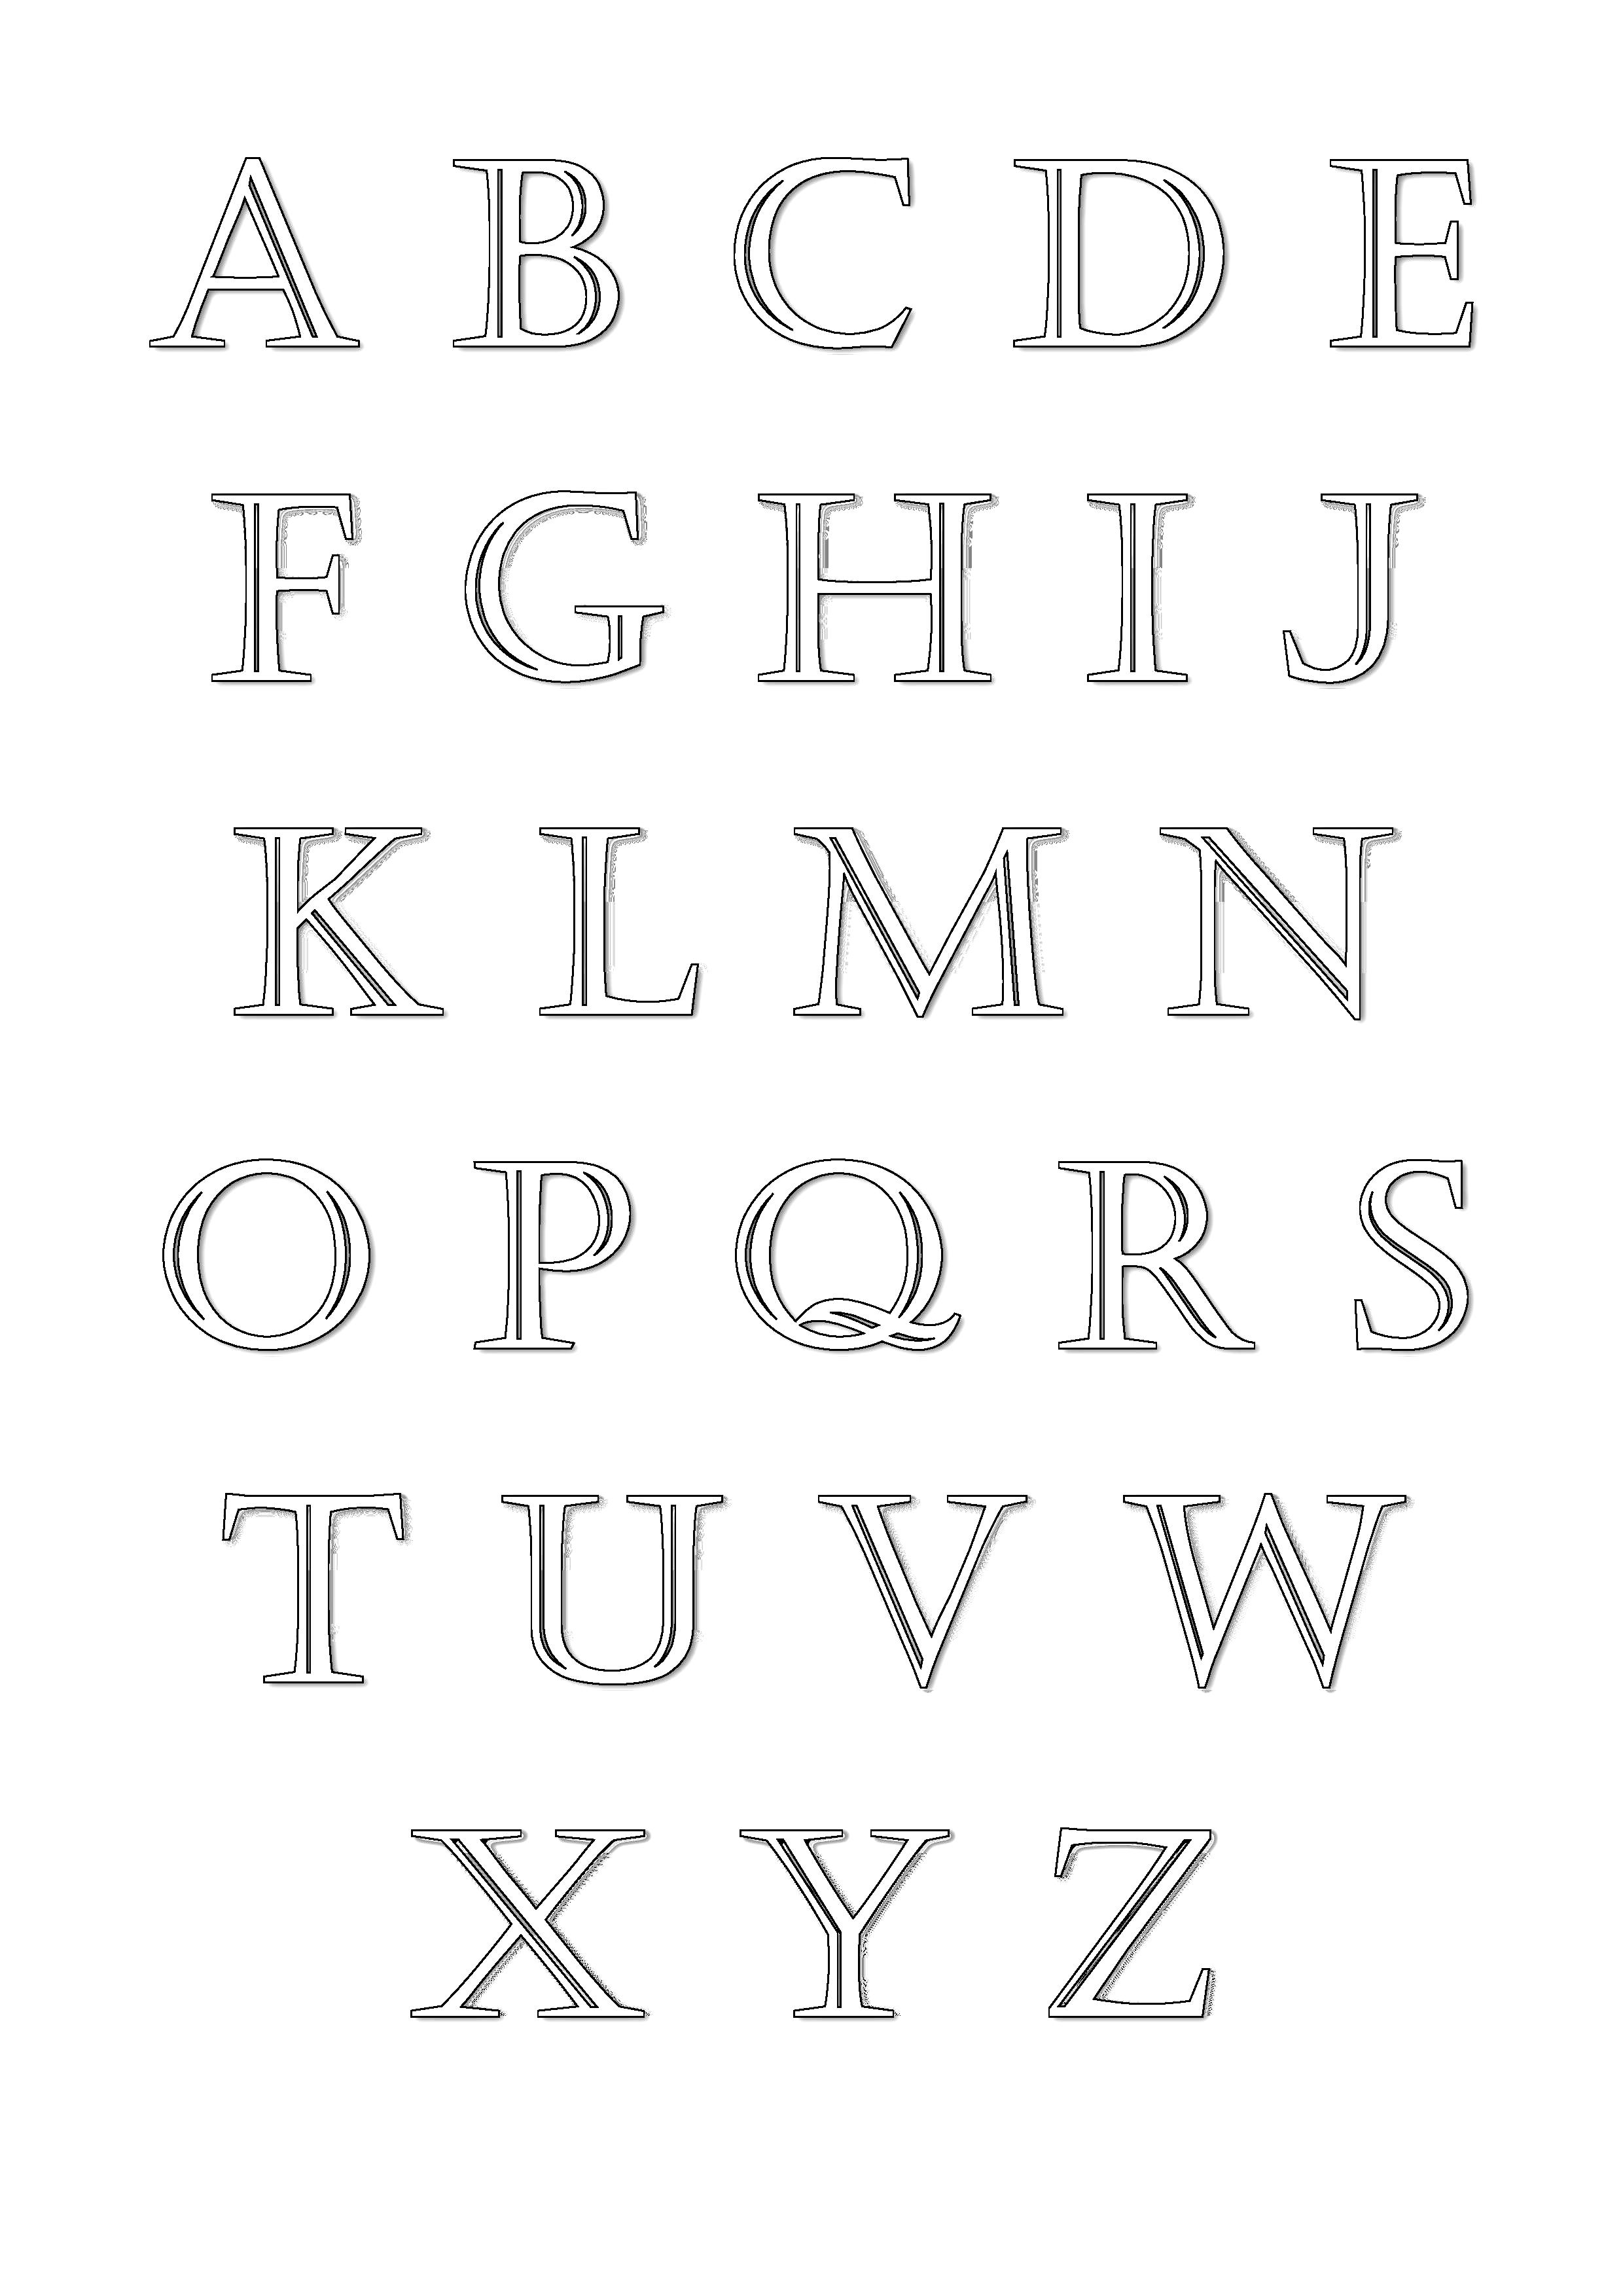 Very serious style fir this alphabet